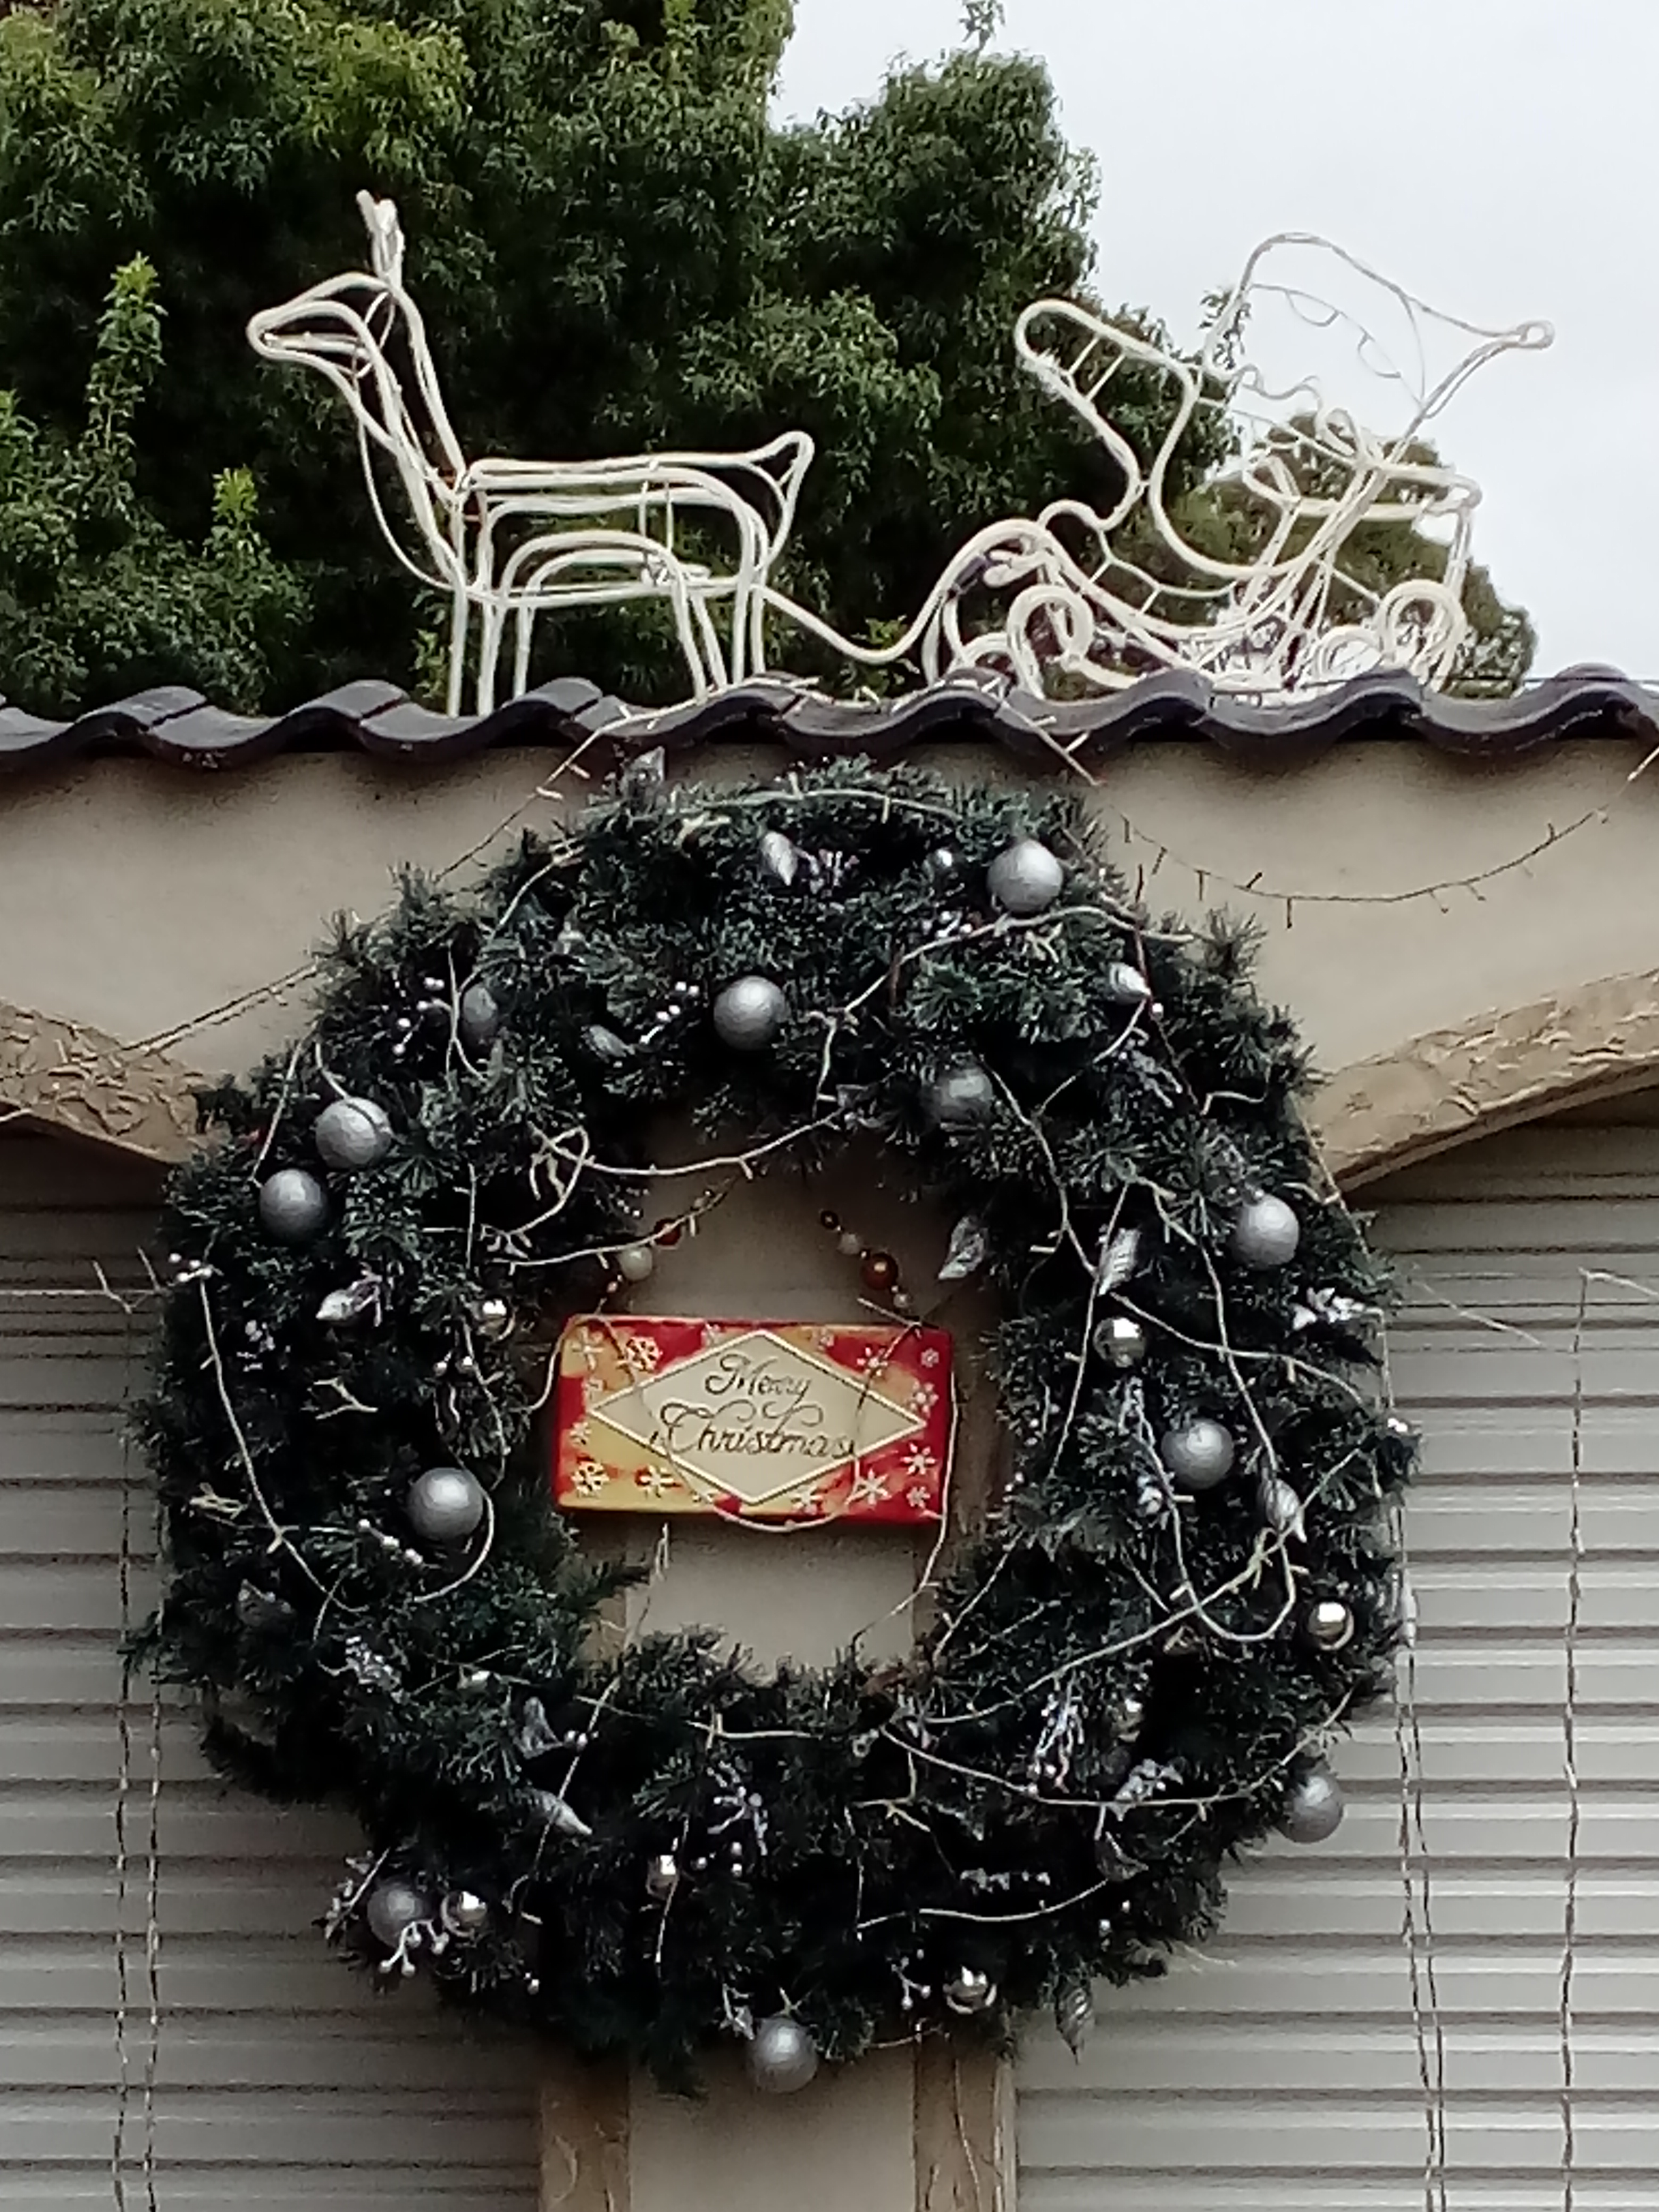 green Christmas wreath with fairy lights